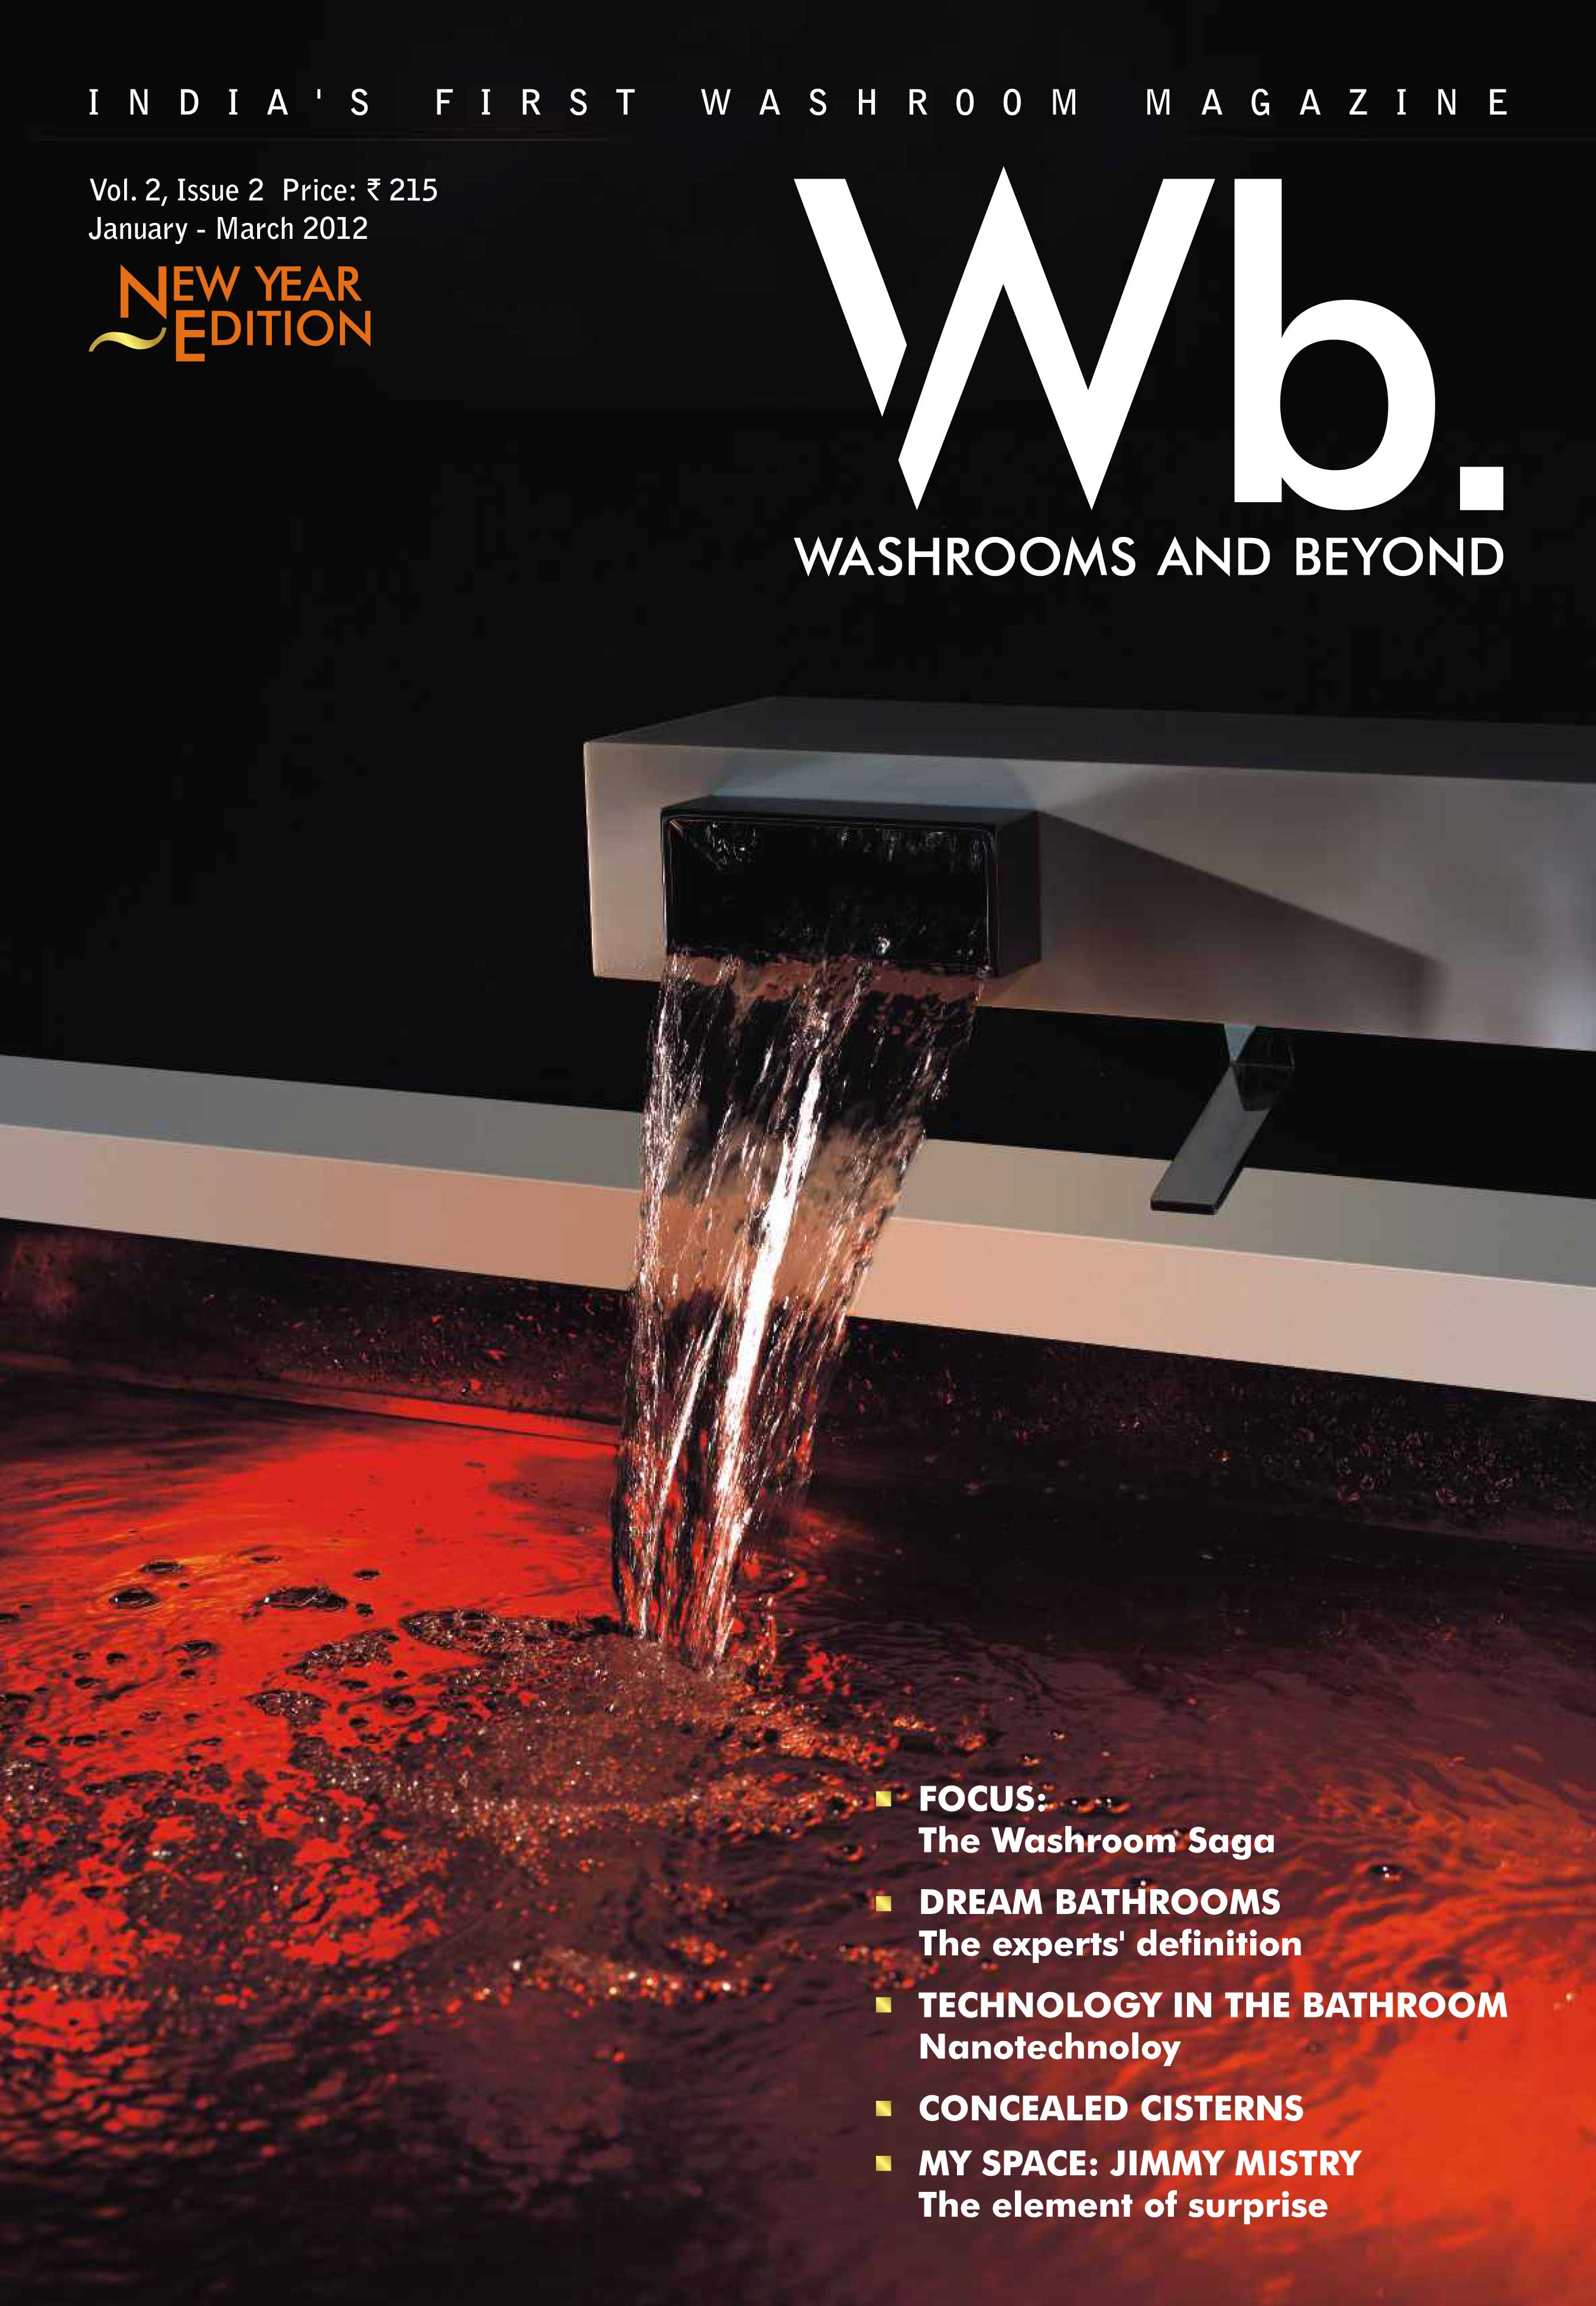 Della News - Washrooms and Beyond Magazine